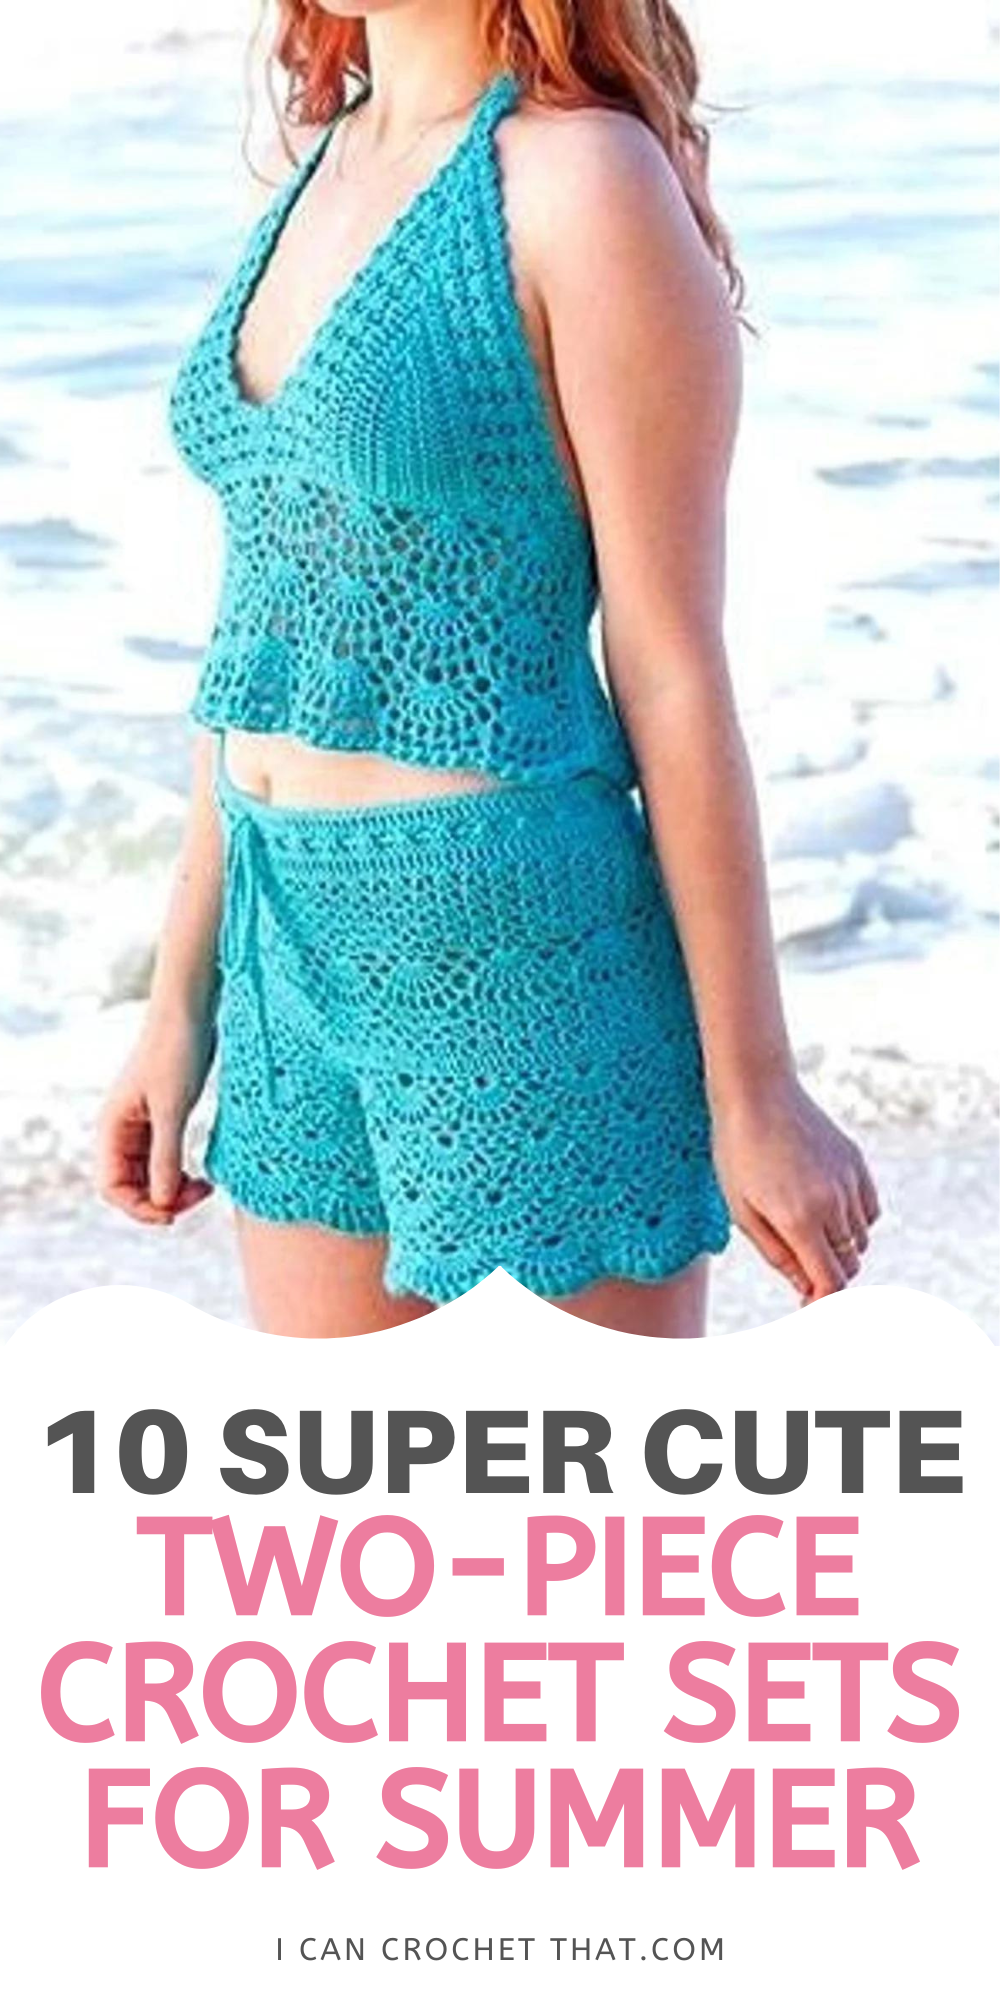 Crochet swimwear is the hottest trend of summer 2022